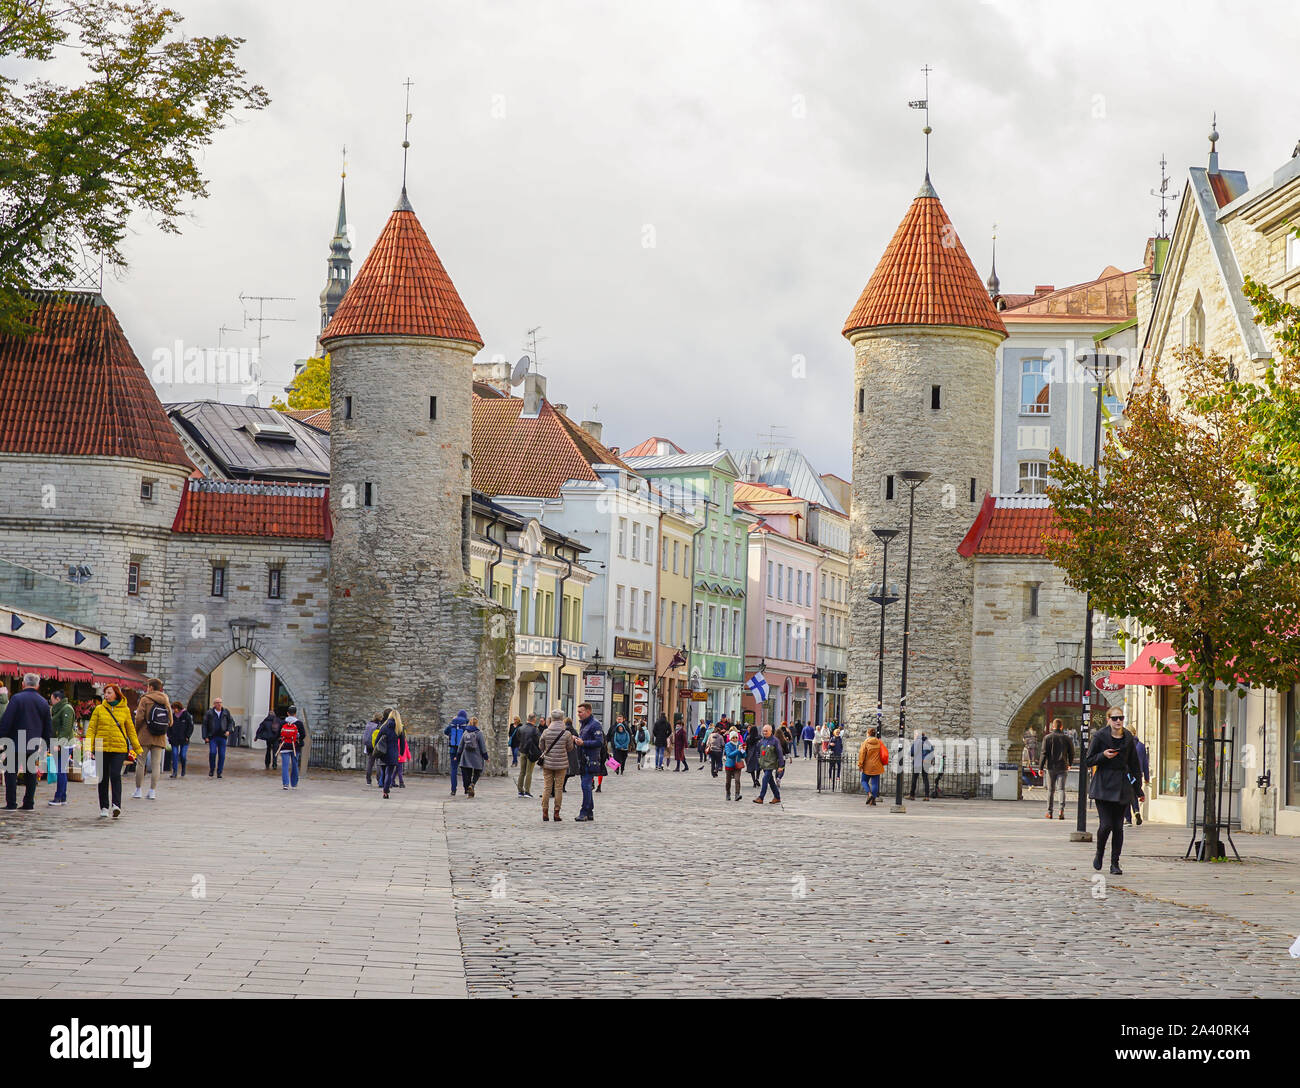 Viru Gate tower in the old town of Tallinn, Estonia Stock Photo